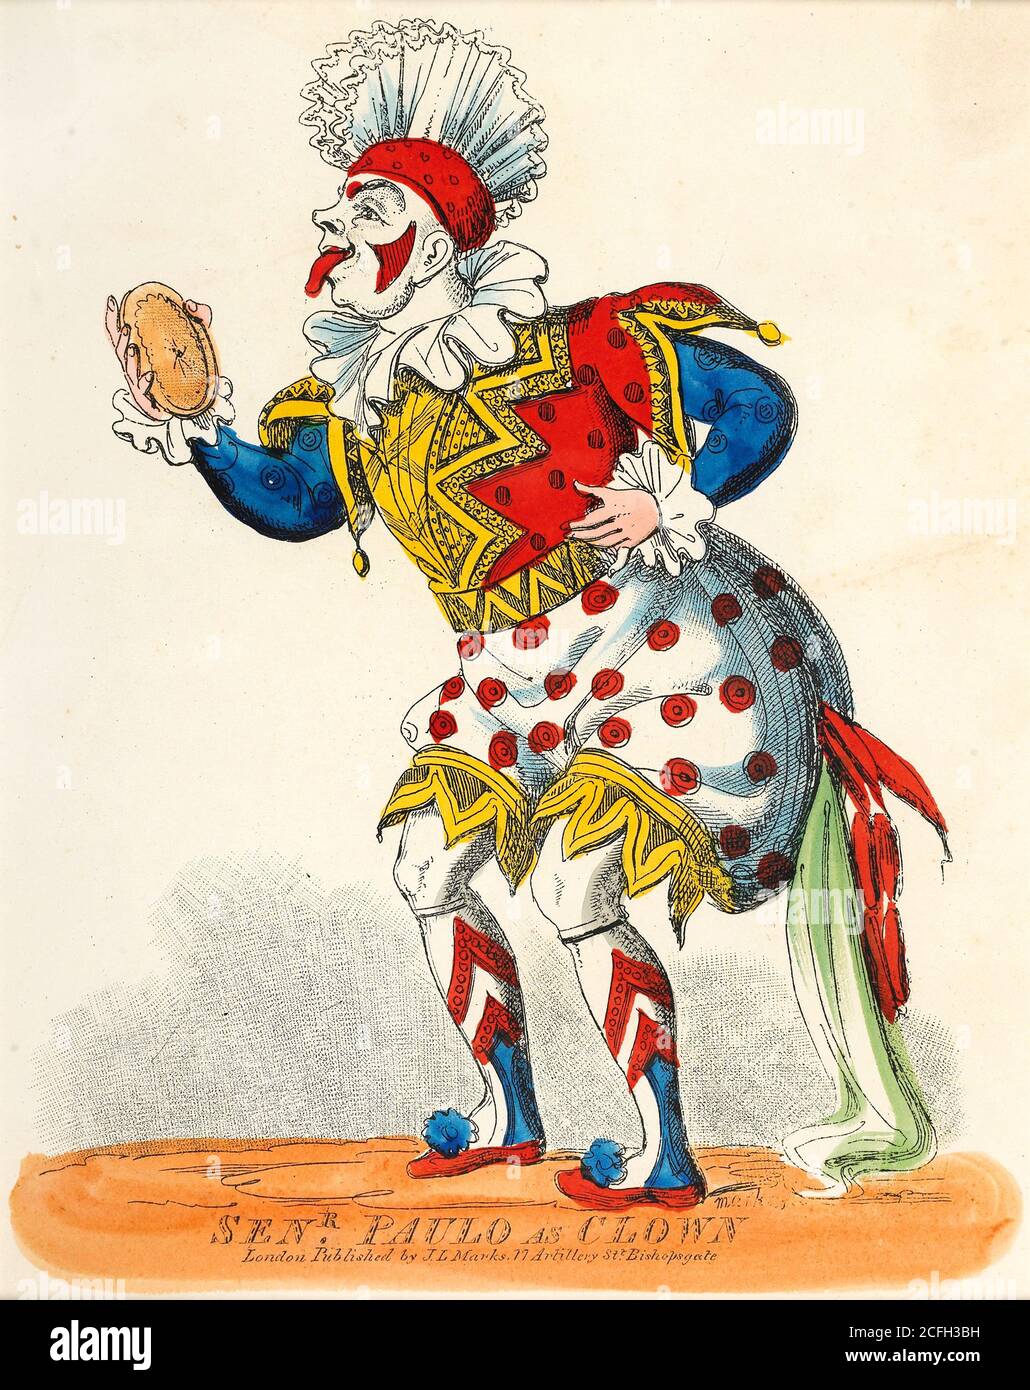 Marks, J.L., Theaterporträt, Senr Paulo als Clown, um 1822-1839, Print, Museum of London, England. Stockfoto